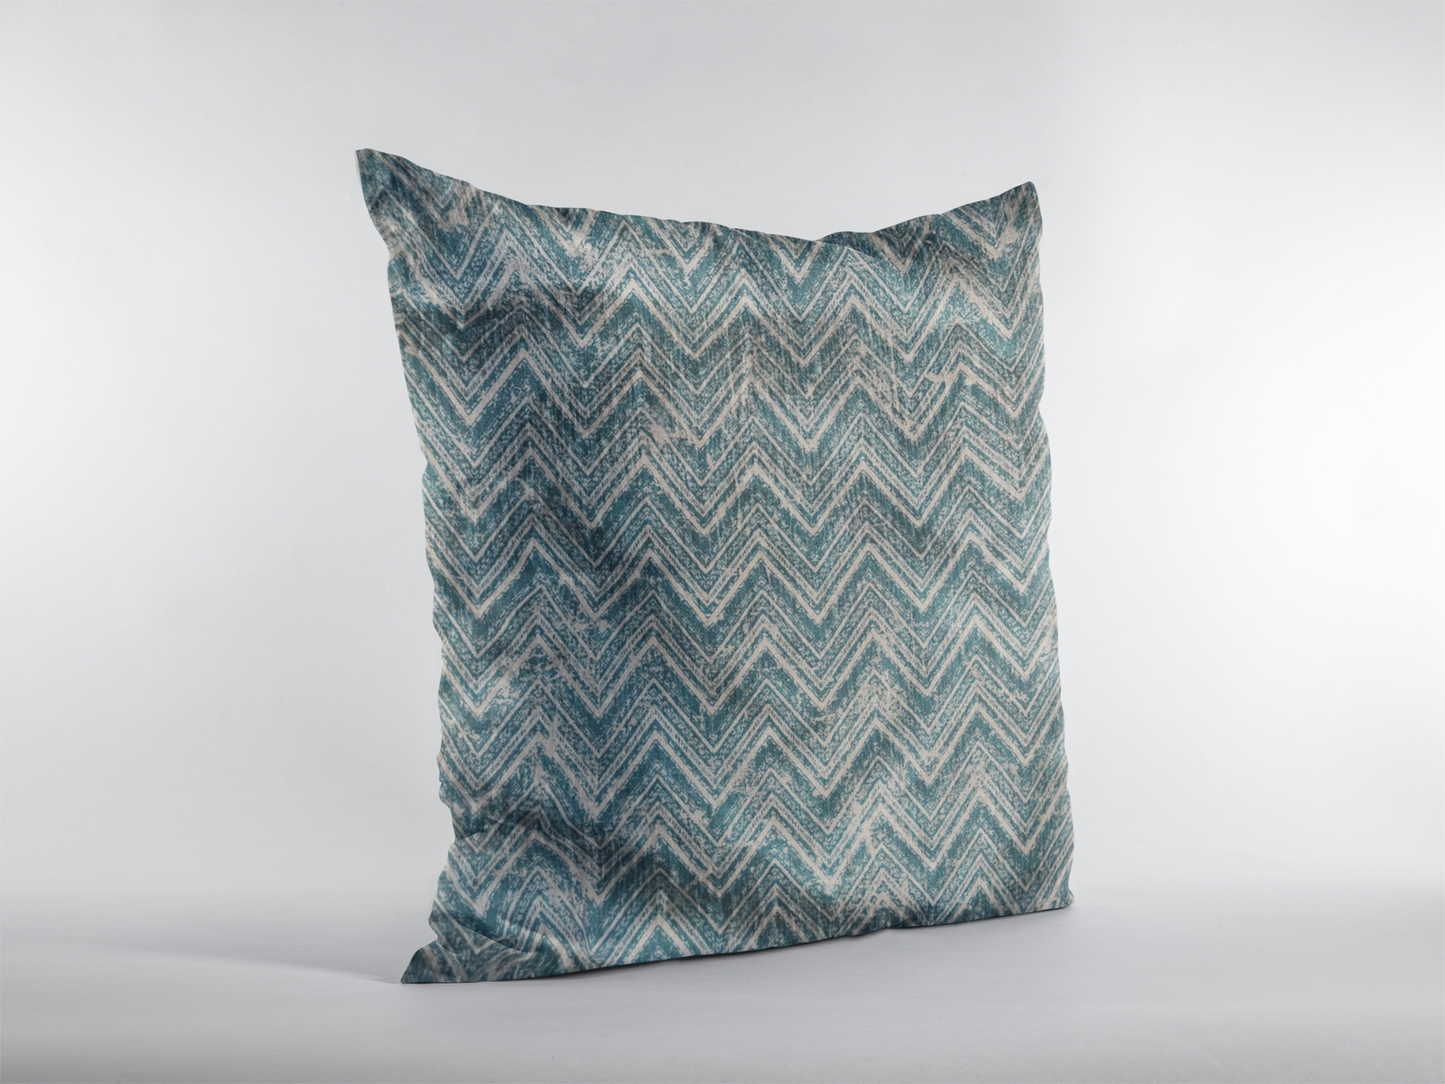 Art Of The Loom Design 2 Aqua Piped 18" / 45cm Cushion Cover